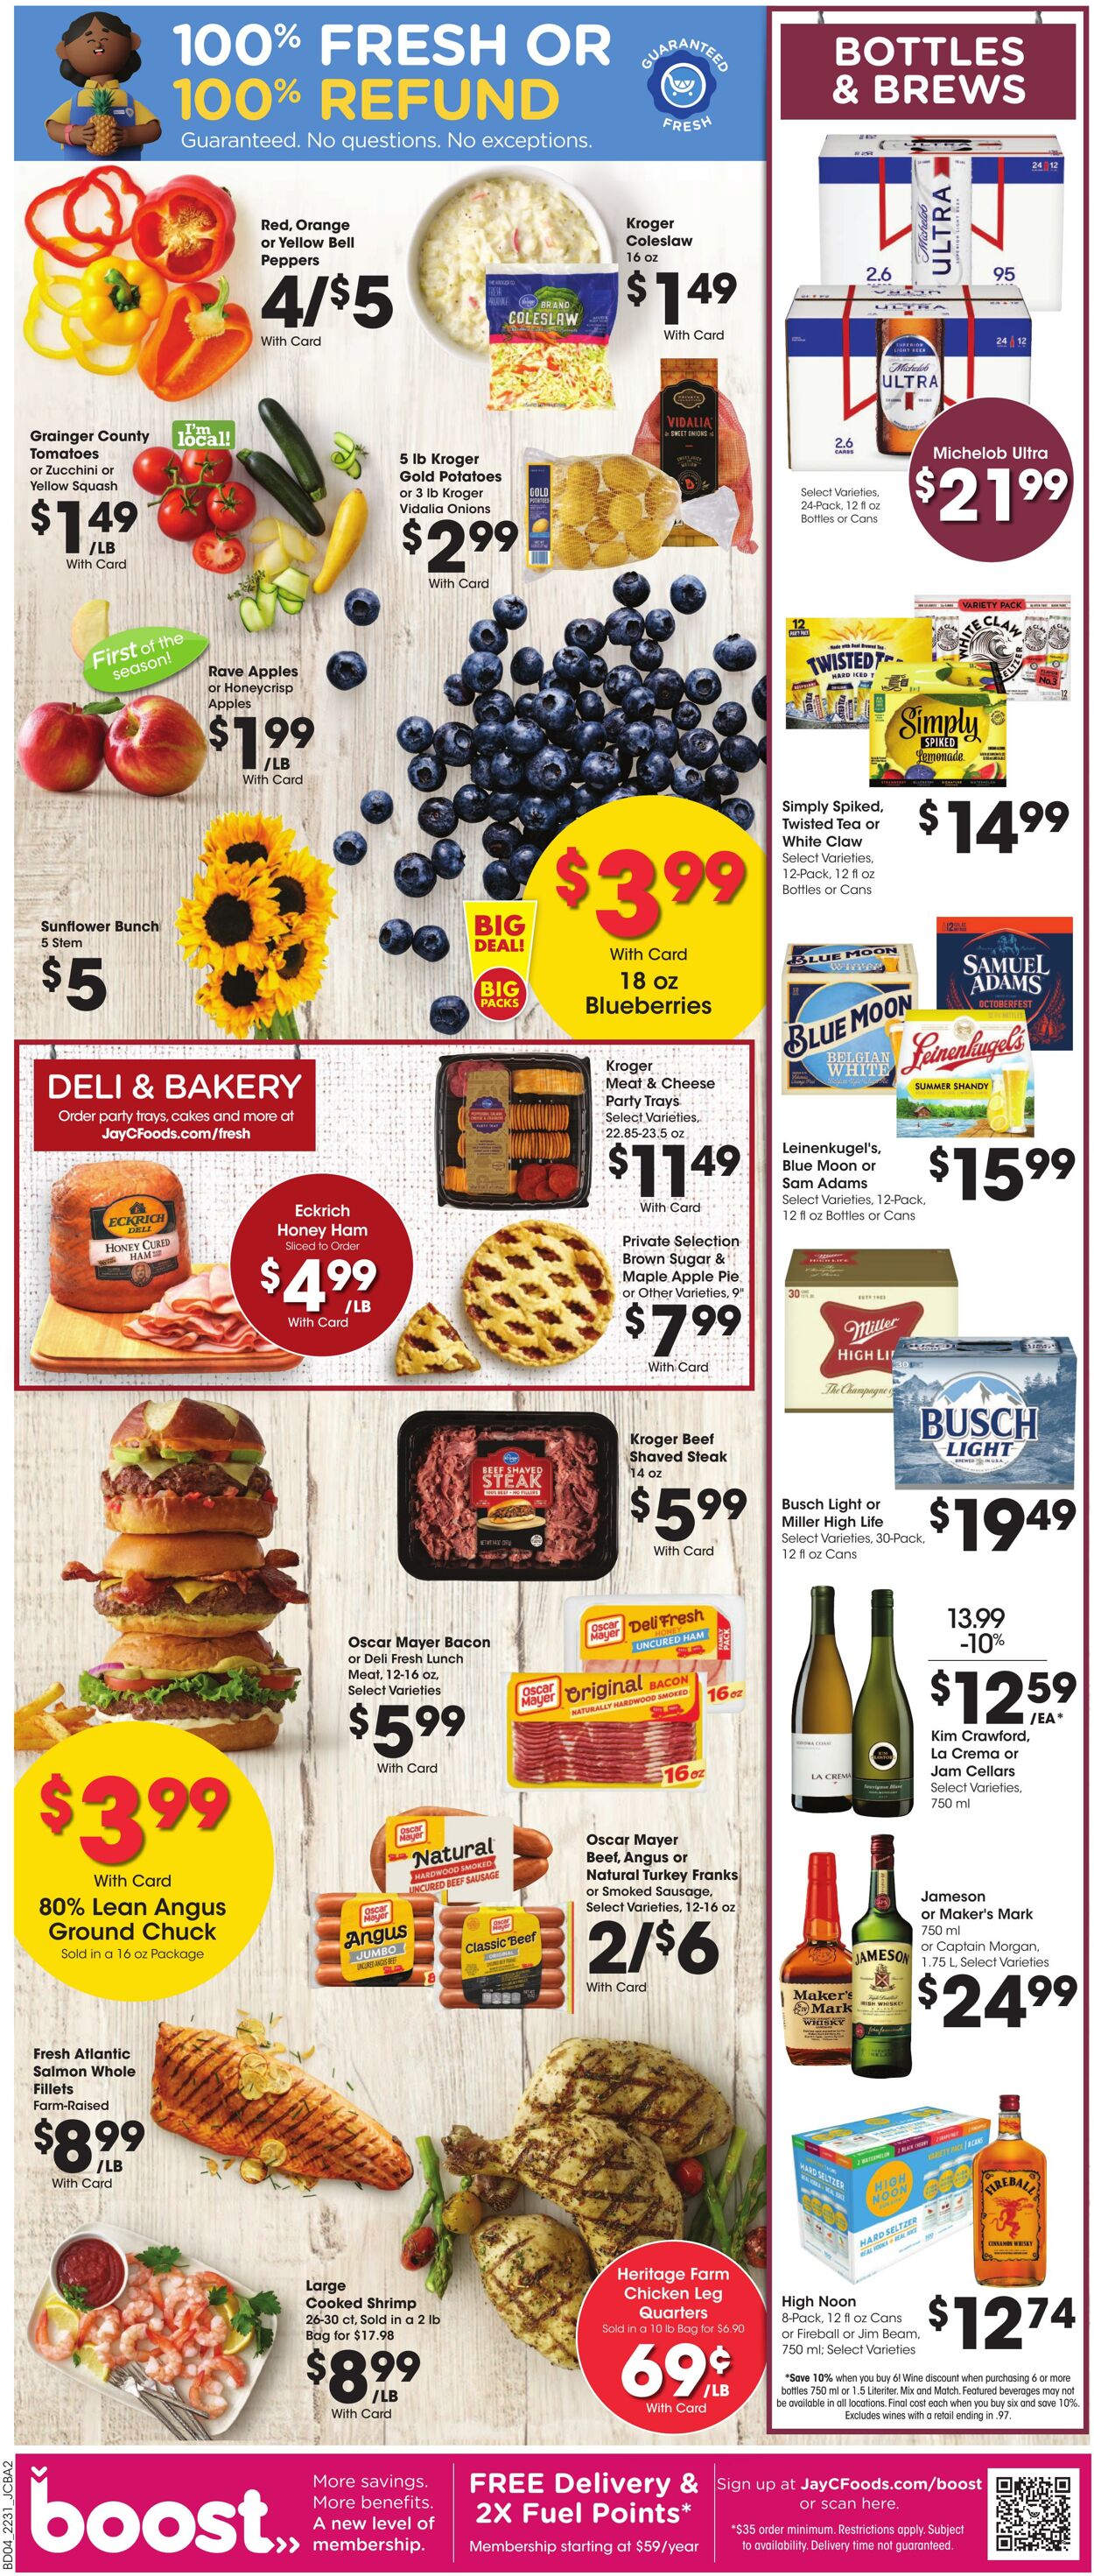 Weekly ad JayC Food Stores 08/31/2022 - 09/06/2022